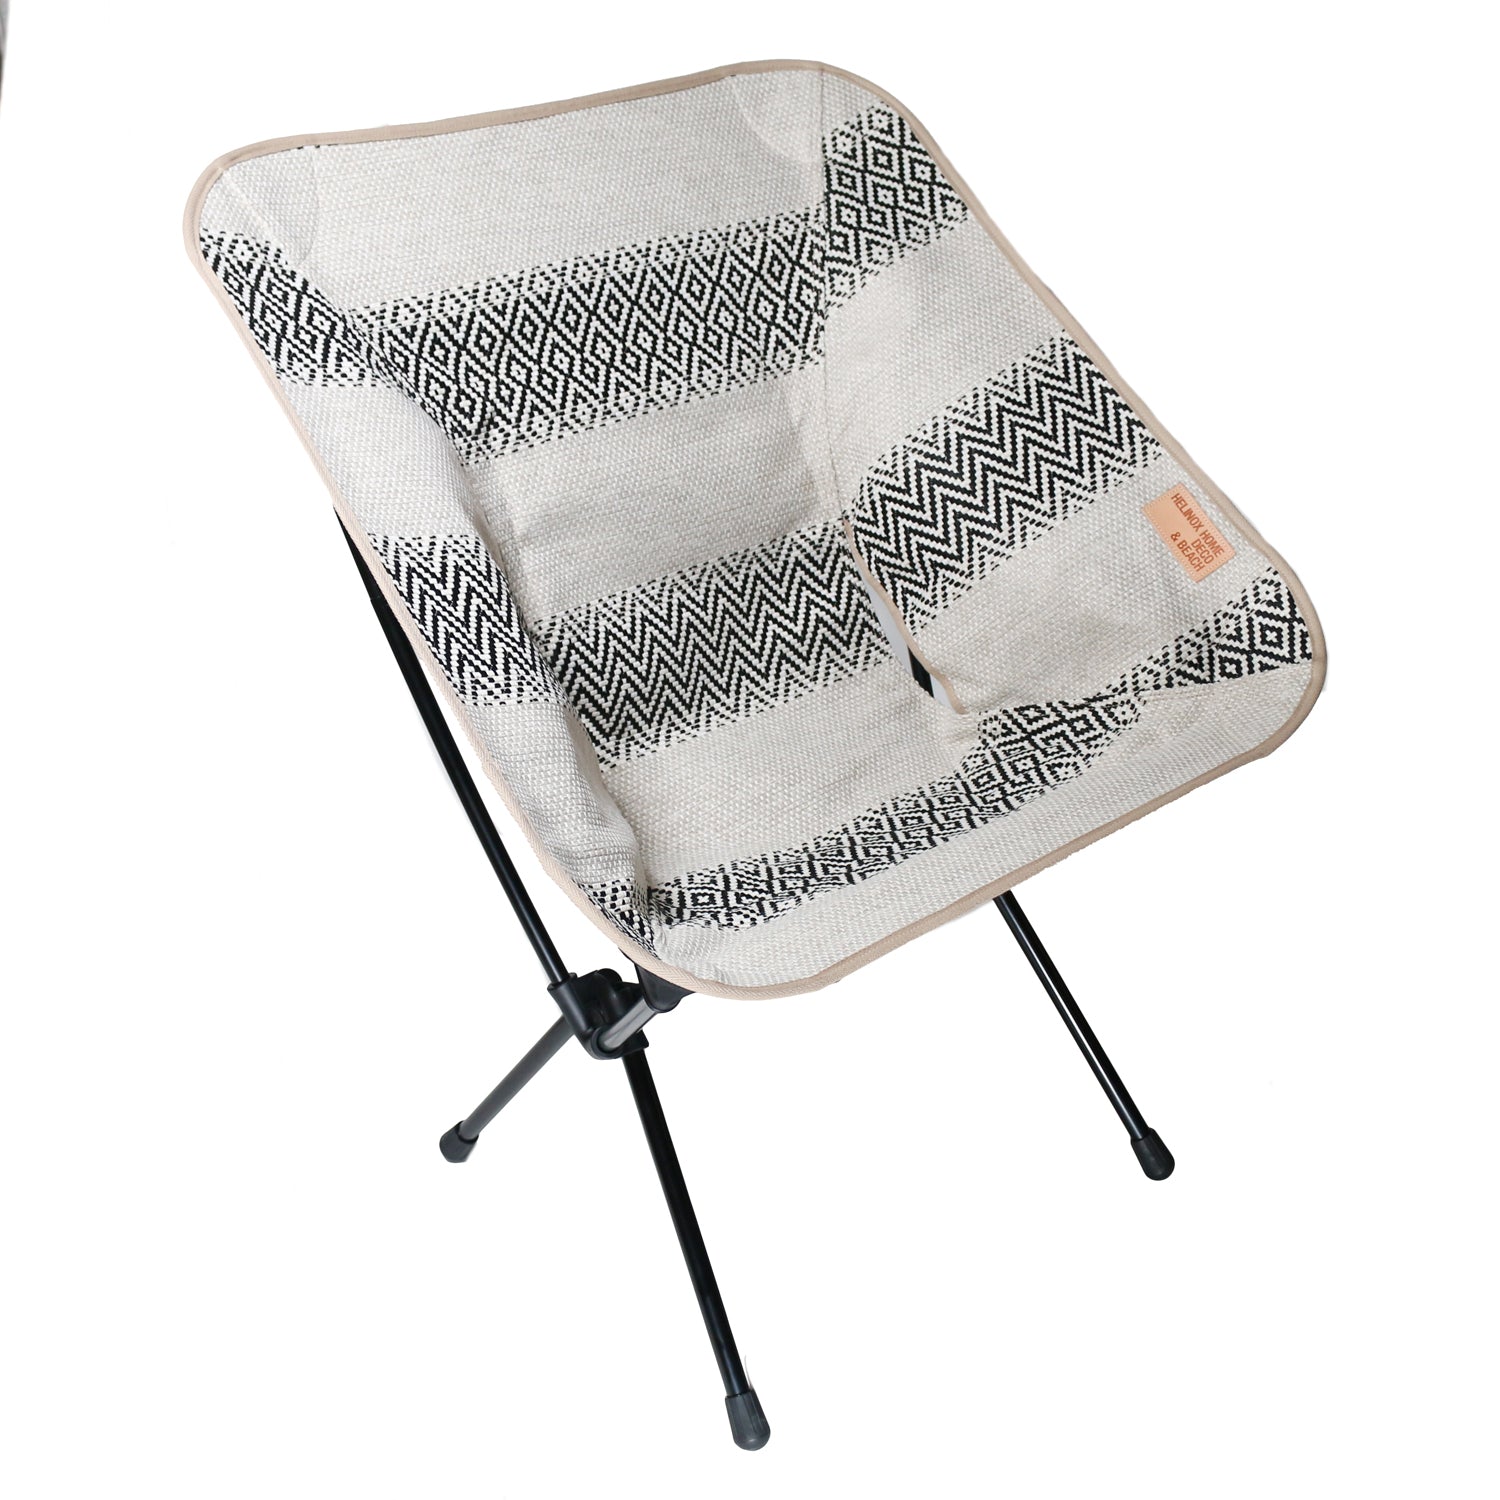 CUB113 Helinox comfort chair XL